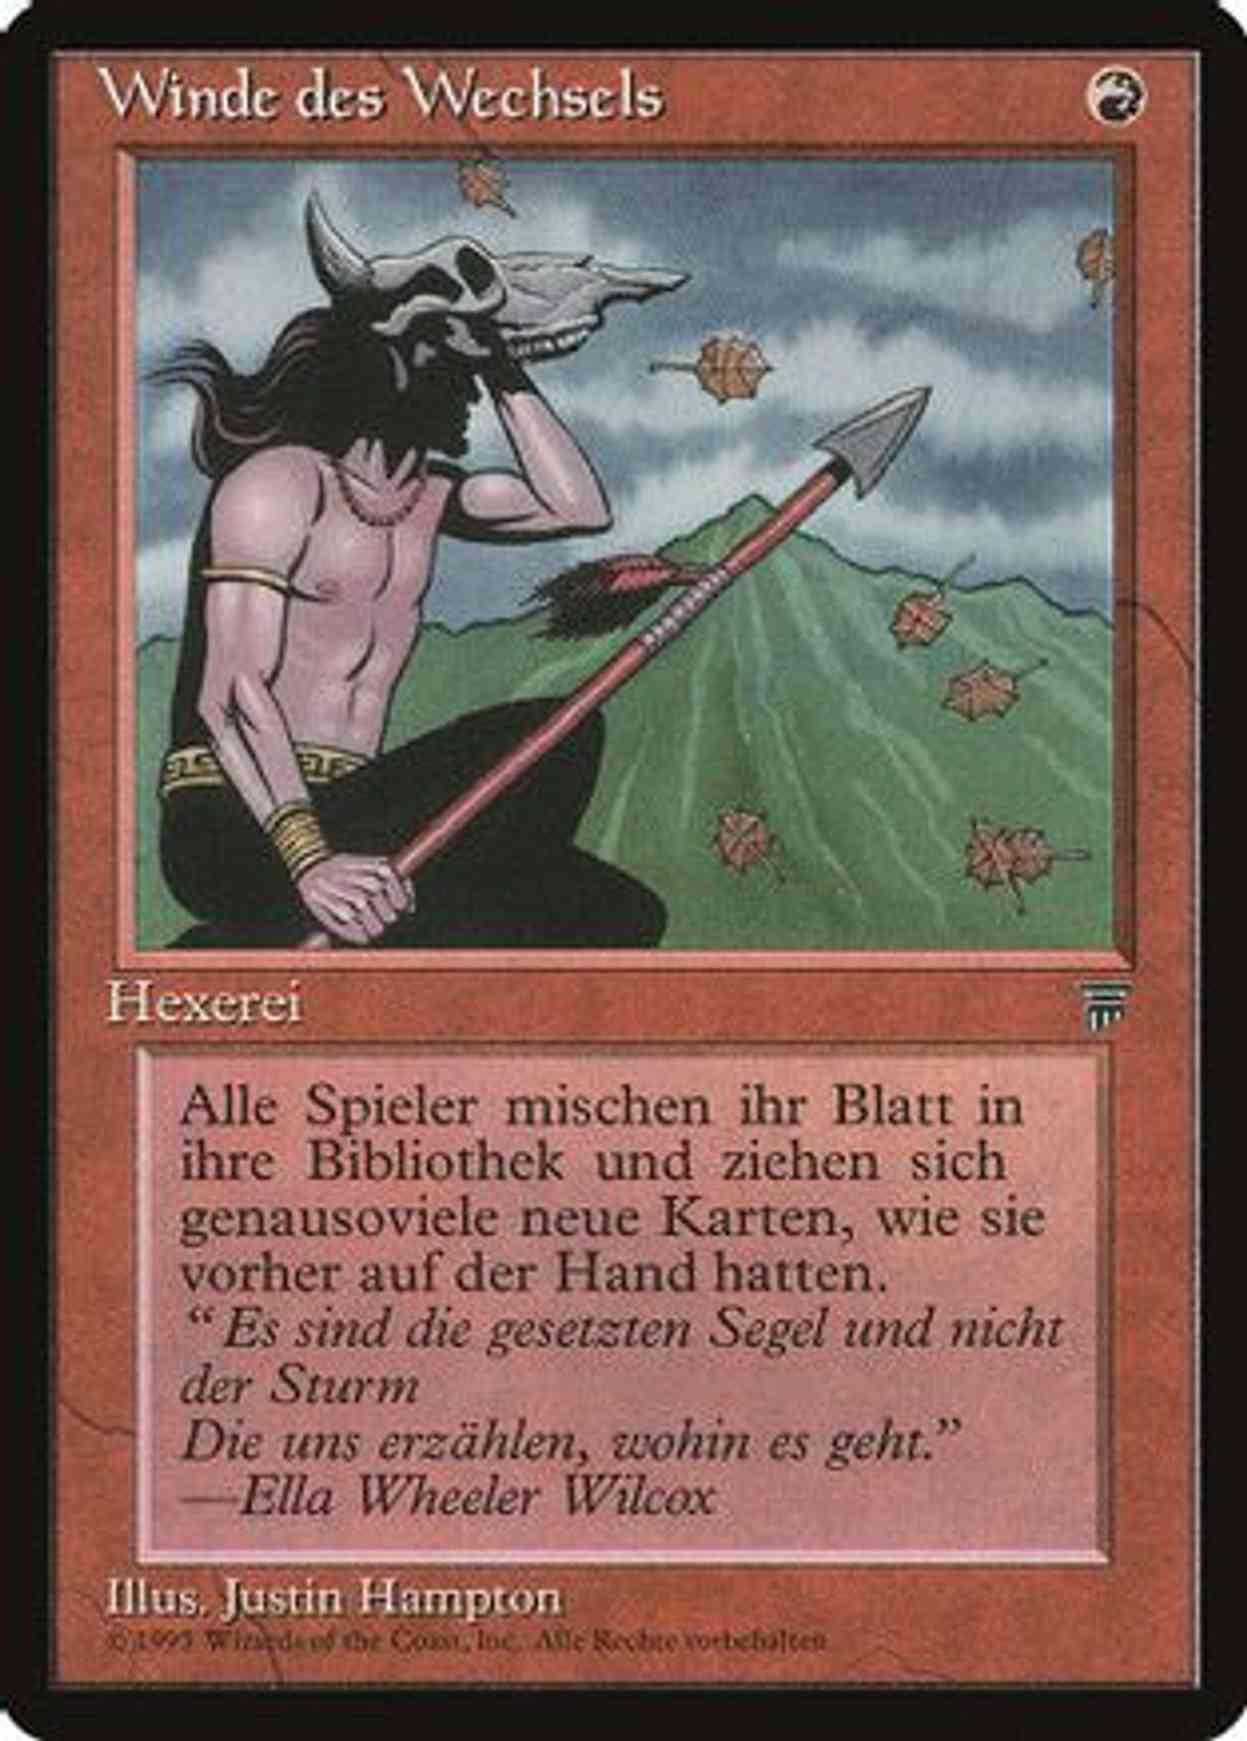 Winds of Change (German) - "Winde des Wechsels" magic card front